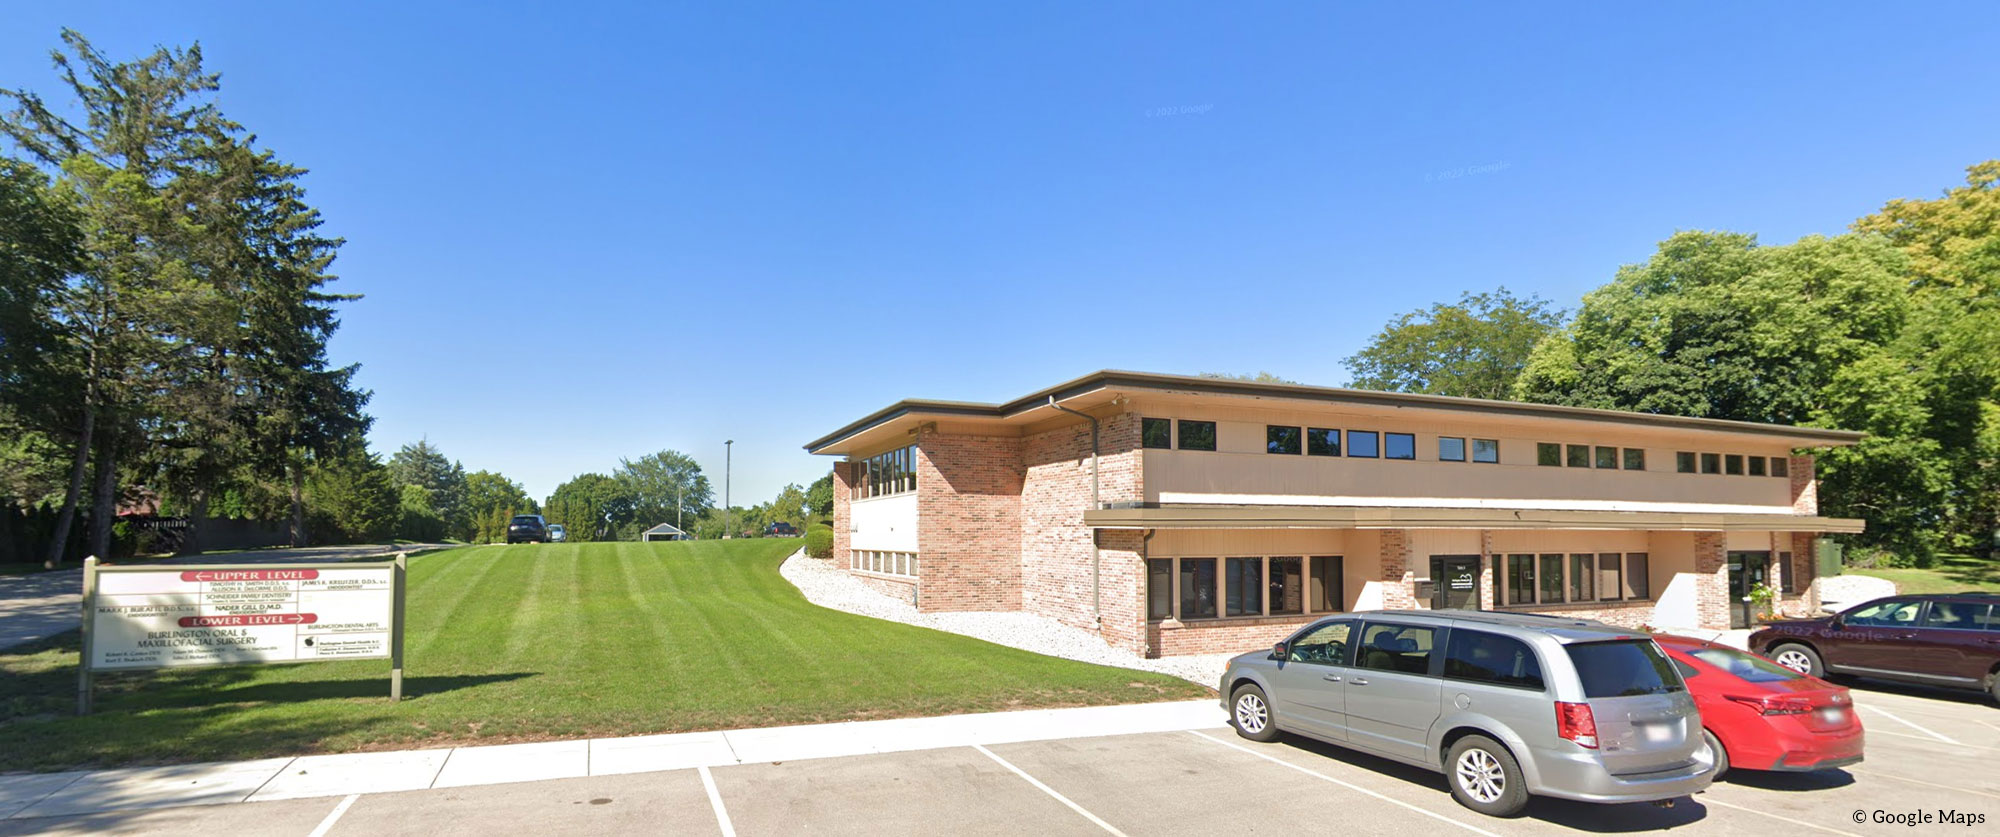 Burlington Oral Surgery Building at 190 Gardner Ave., Burlington WI